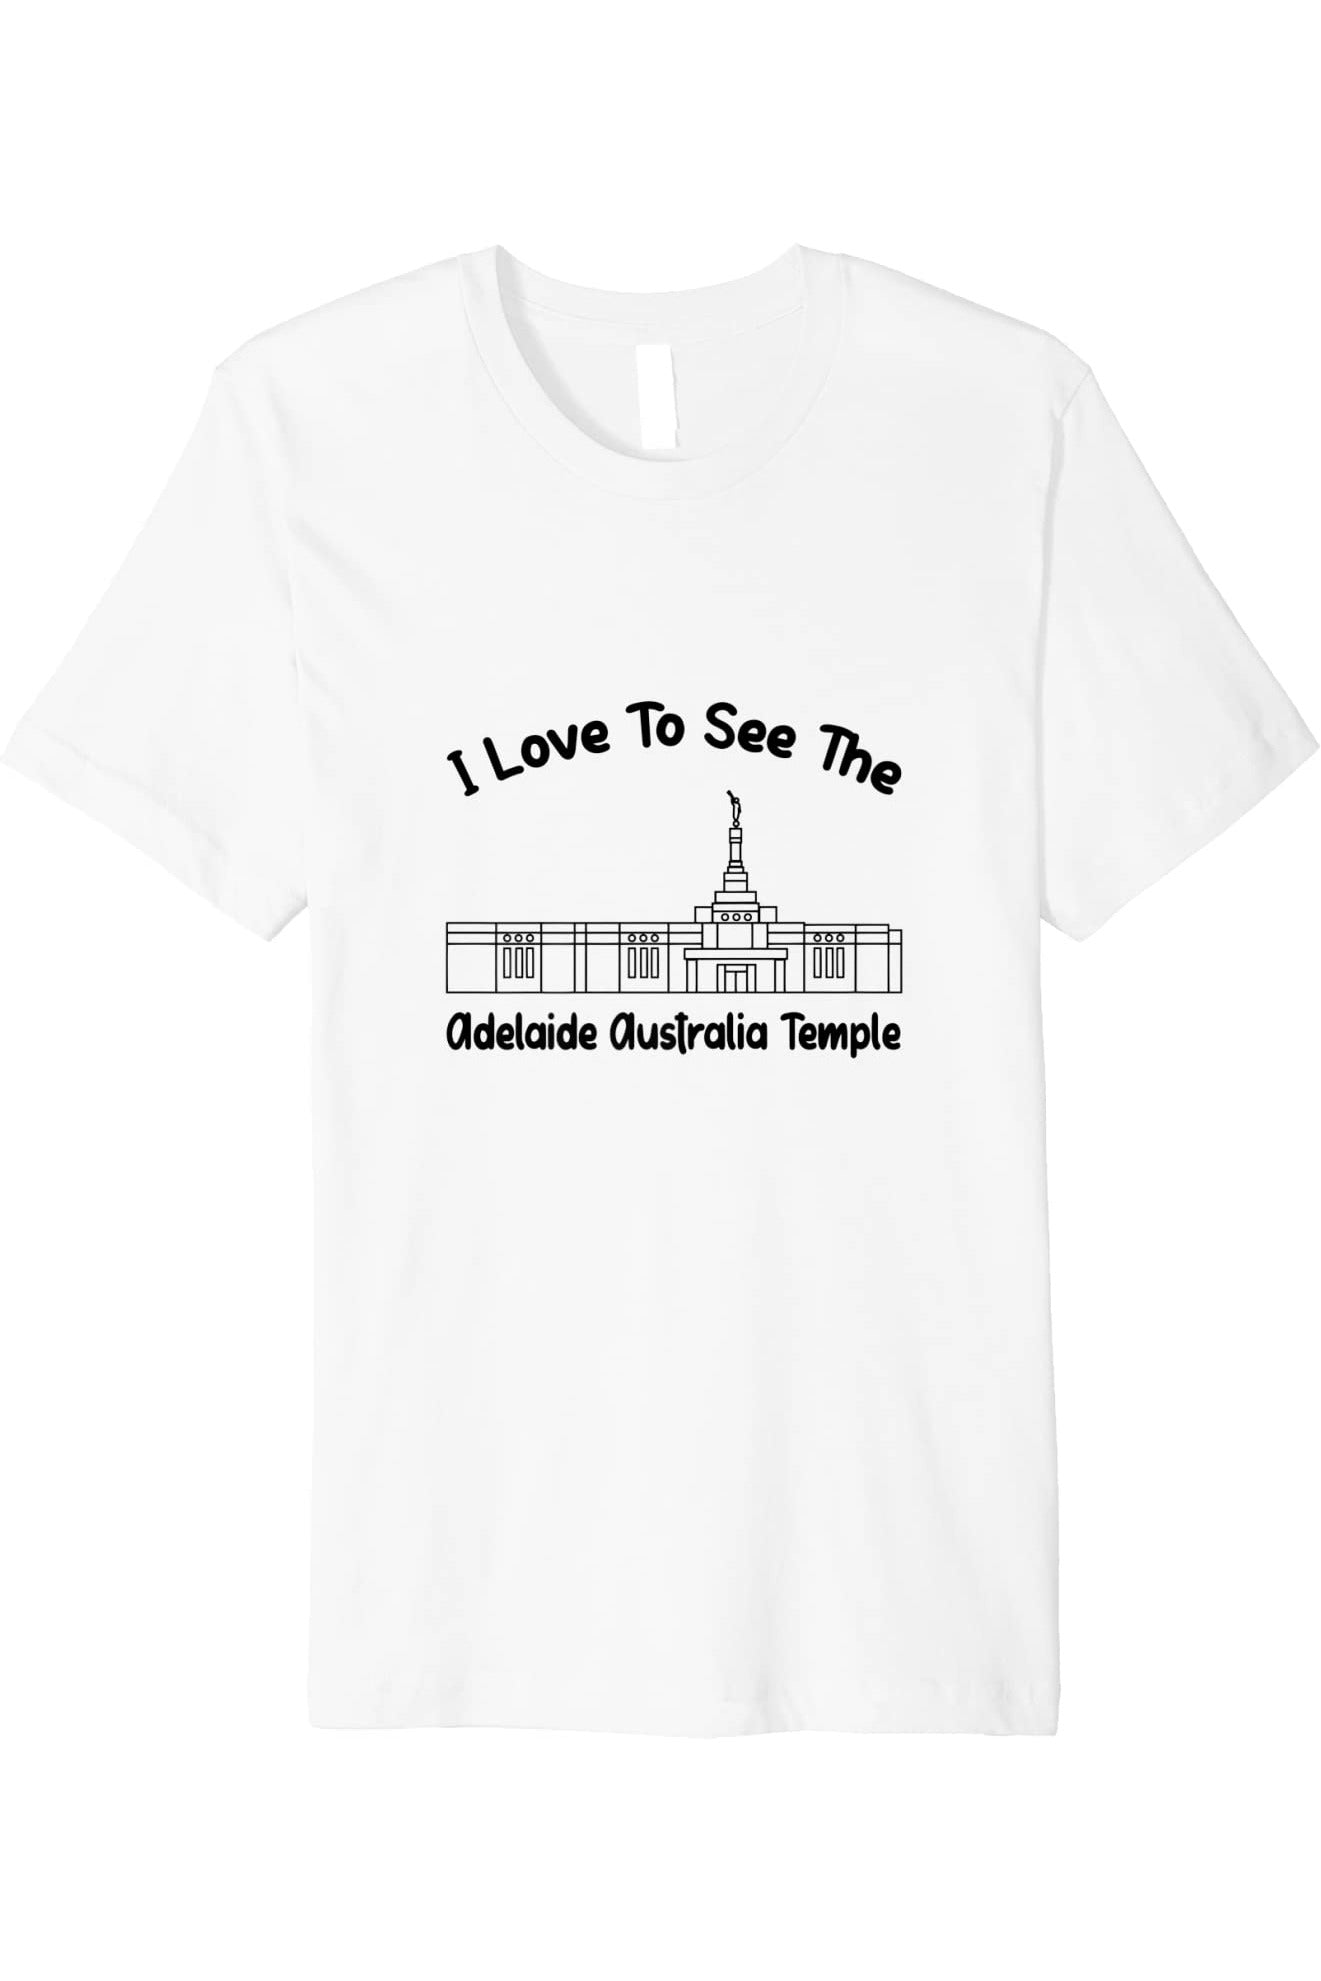 Adelaide Australia Temple T-Shirt - Premium - Primary Style (English) US